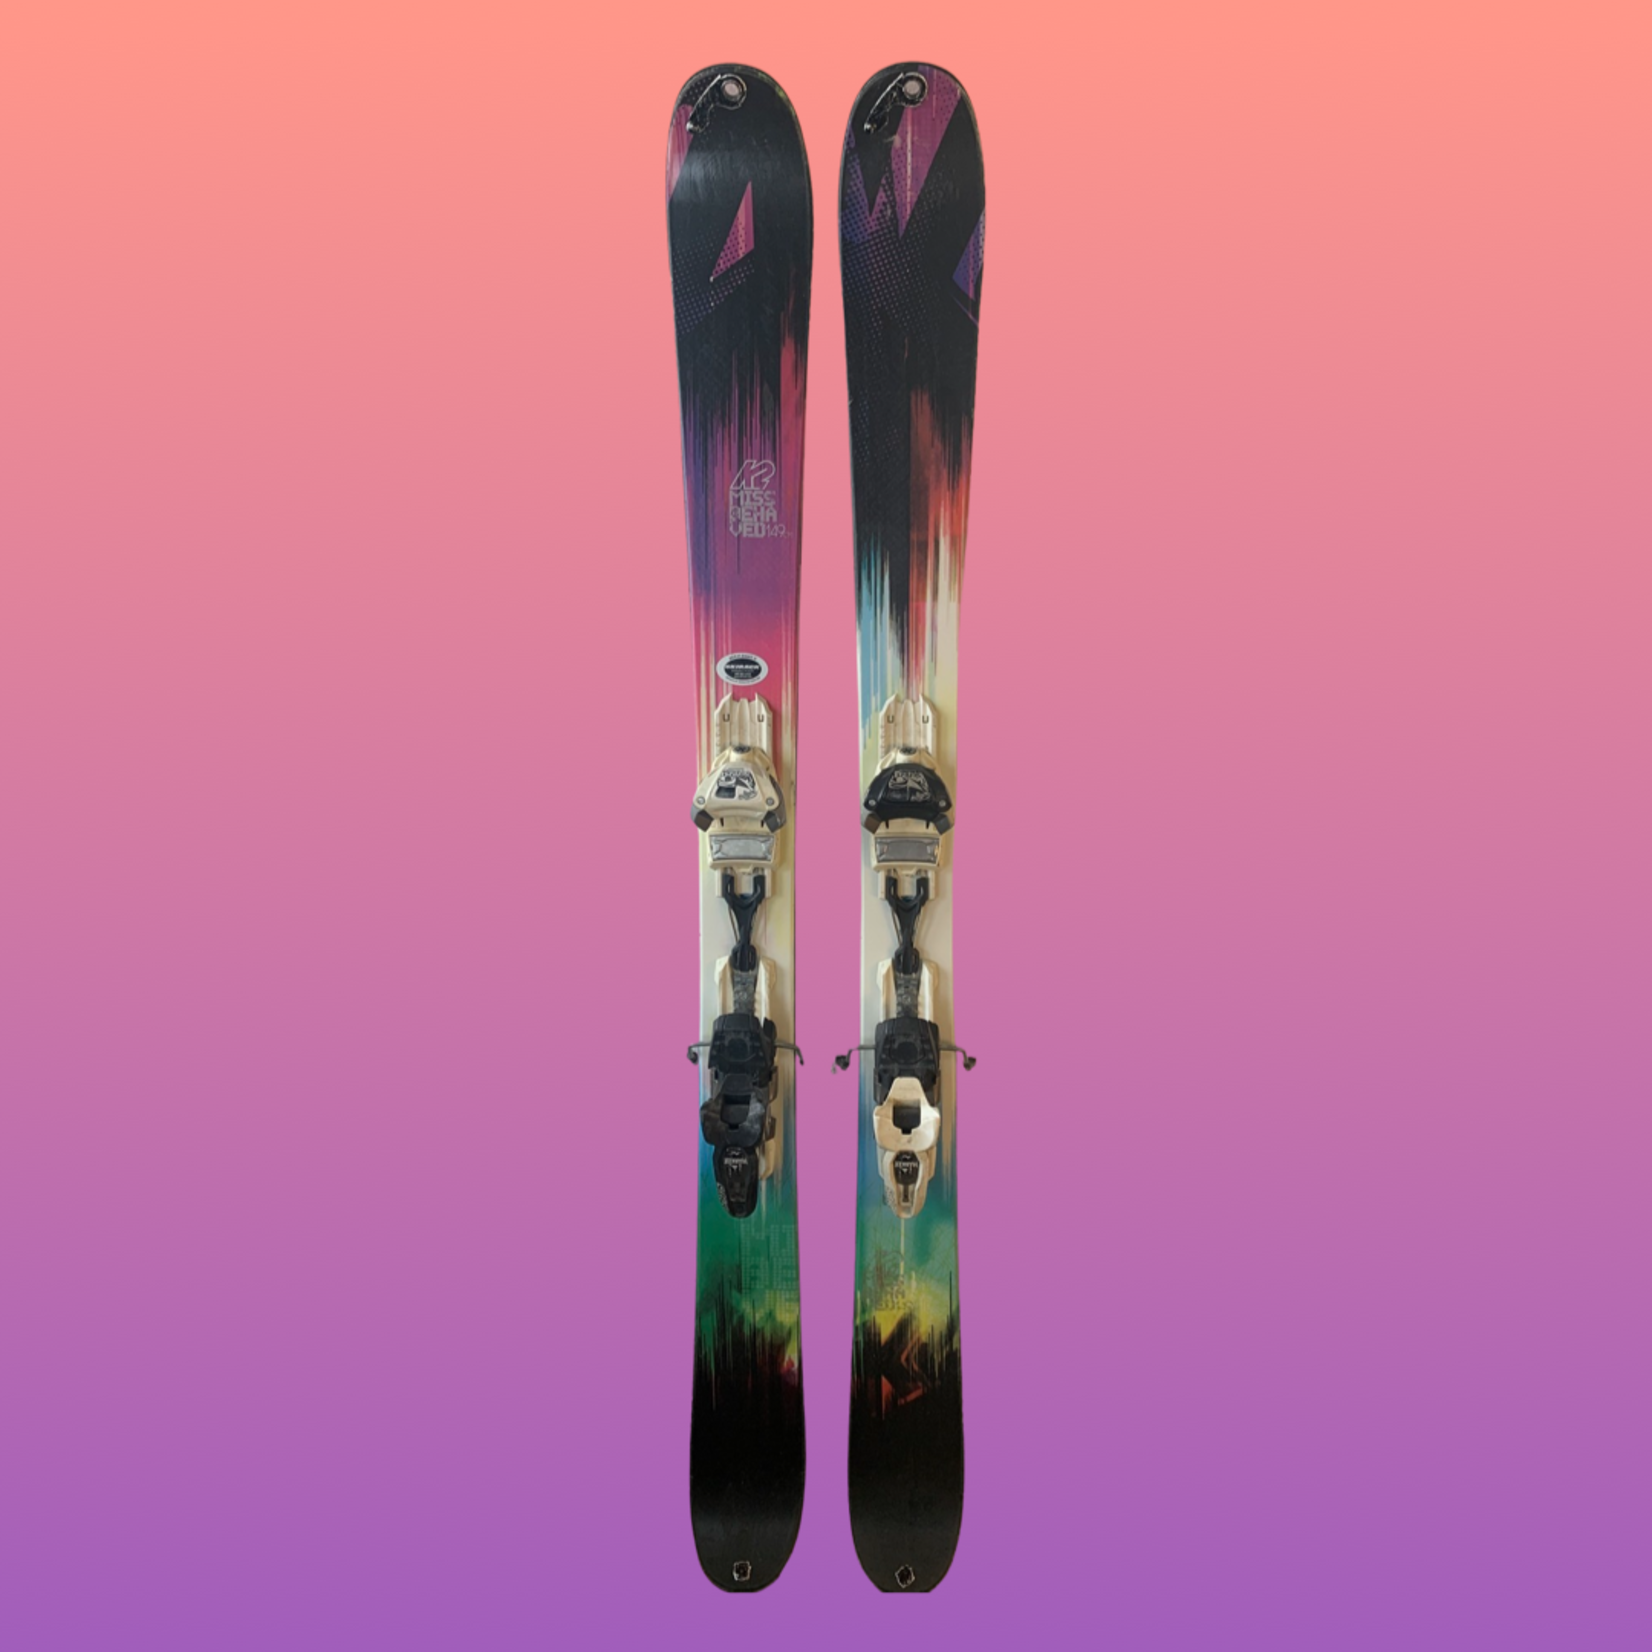 K2 K2 Missbehaved Skis + Marker Schizo Demo Bindings, Size 149cm